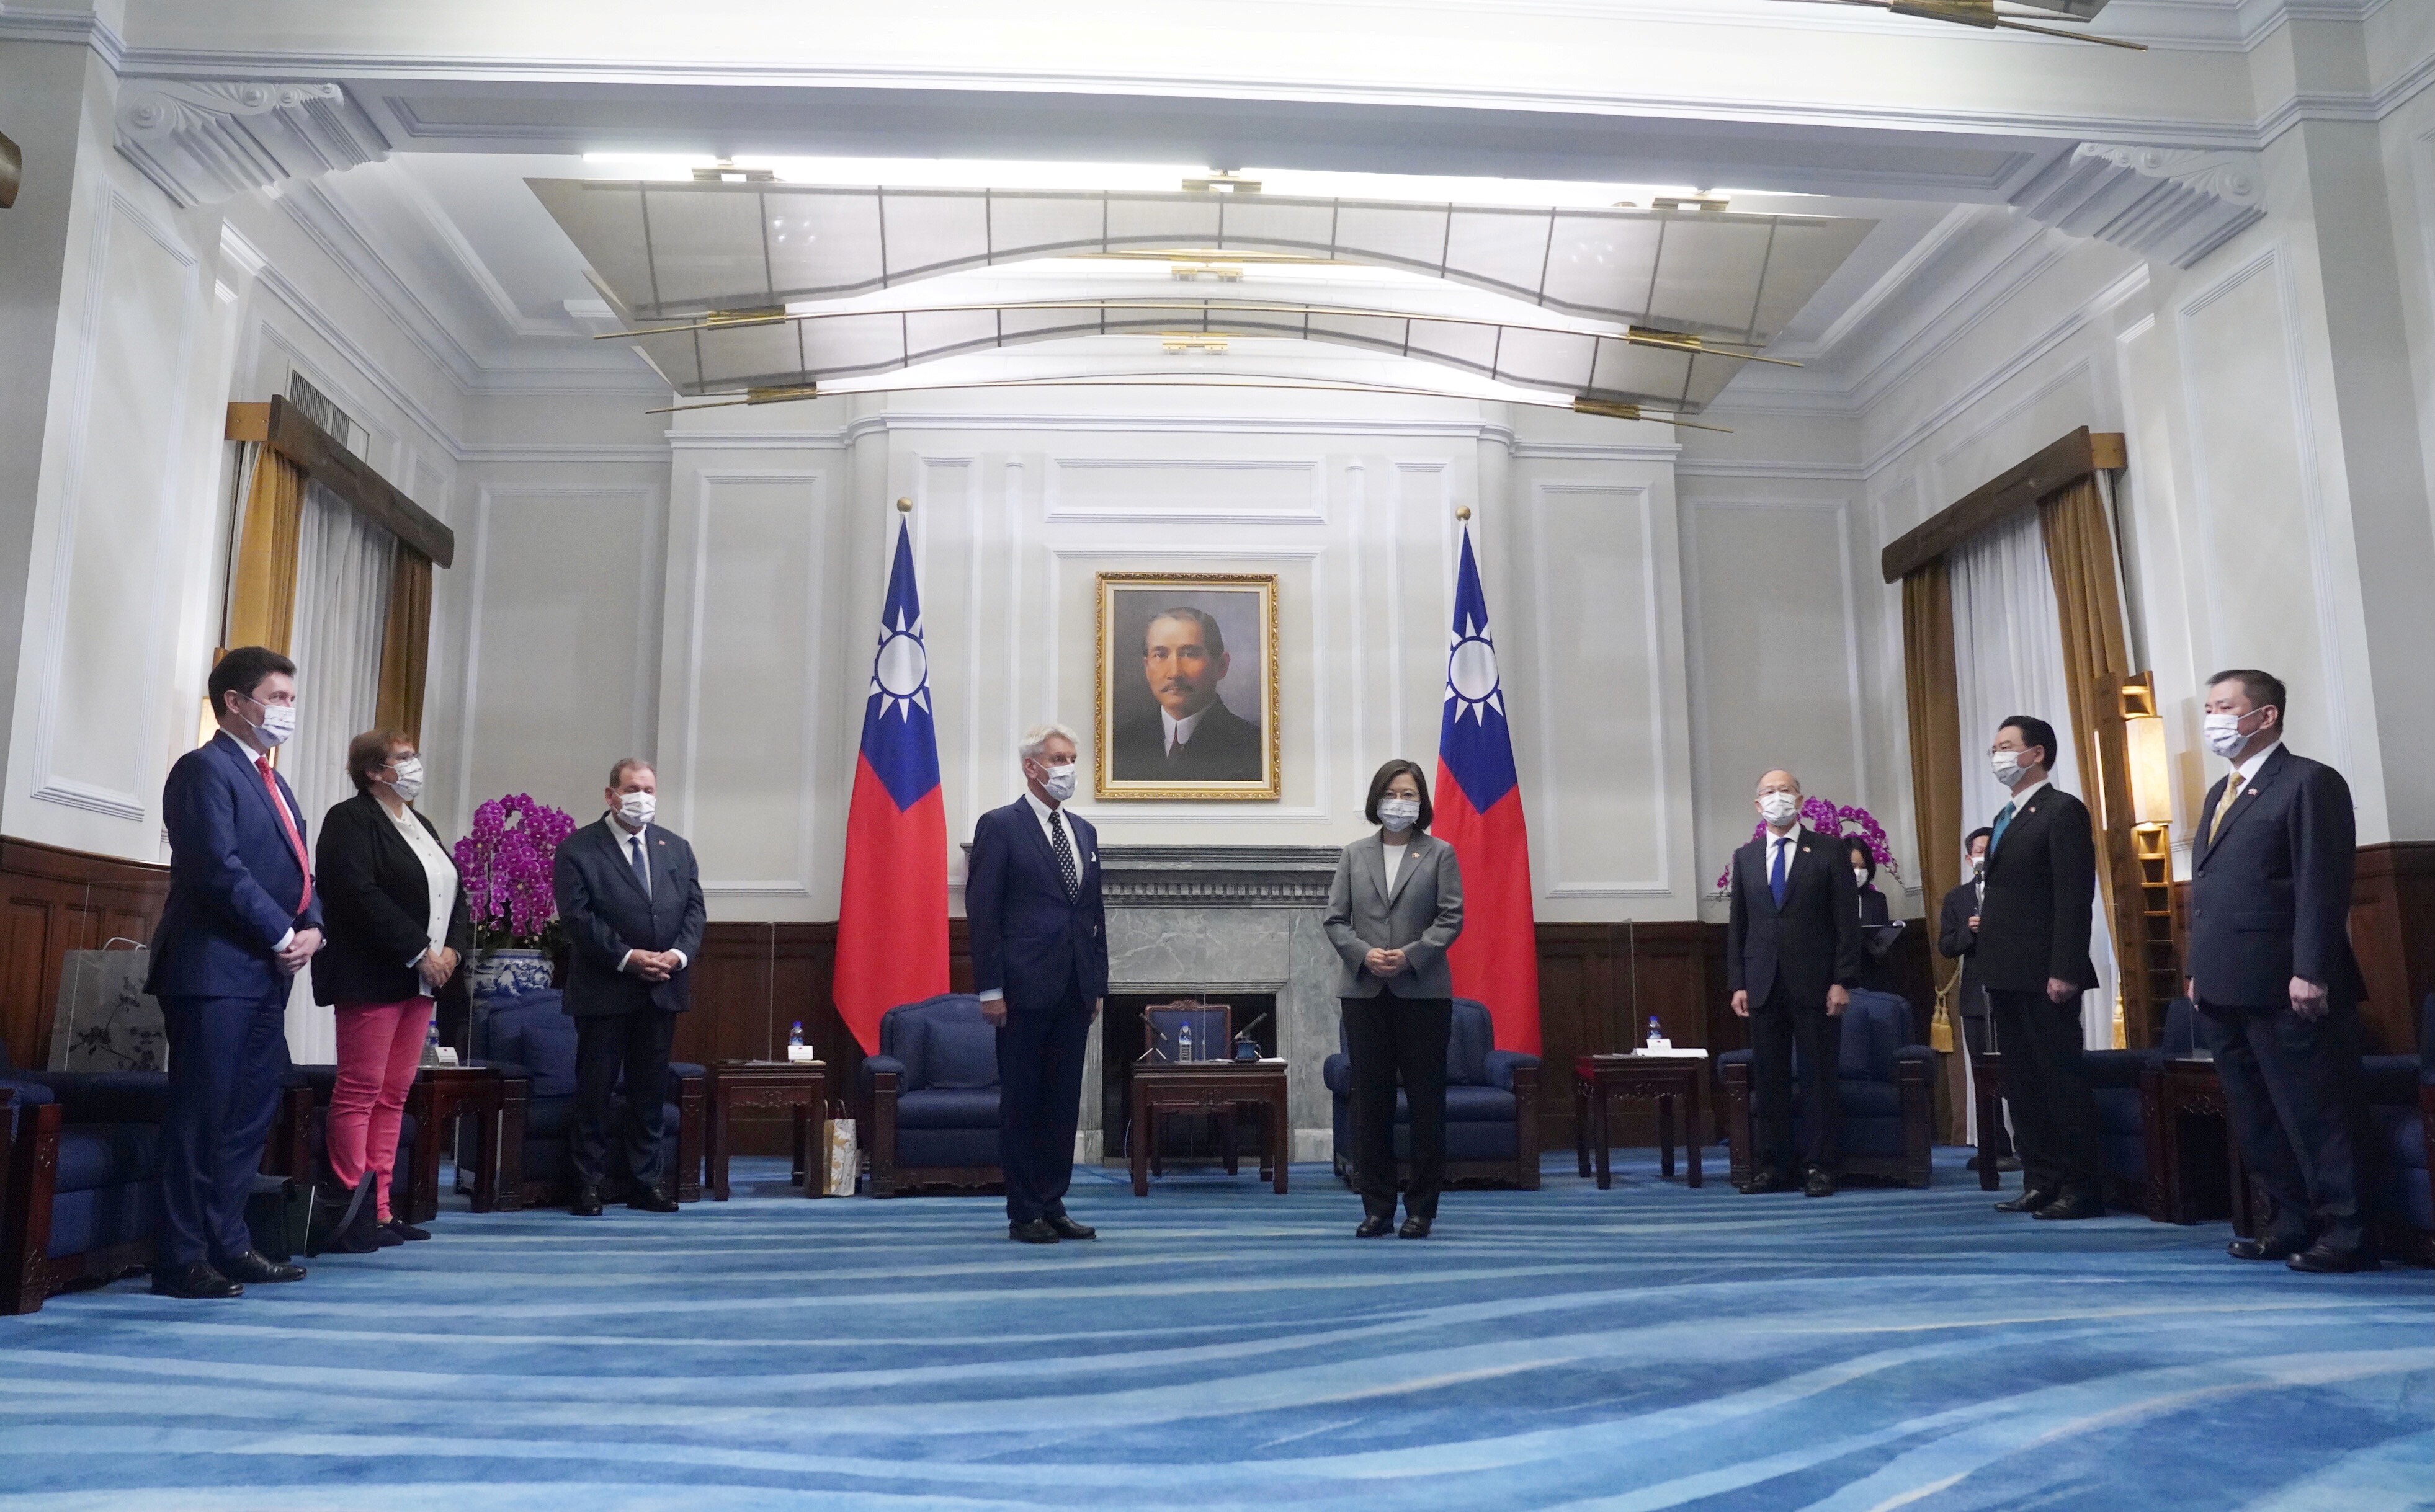 Taiwan's President Tsai Ing-wen stands next to French Senator Alain Richard during their meeting in Taipei